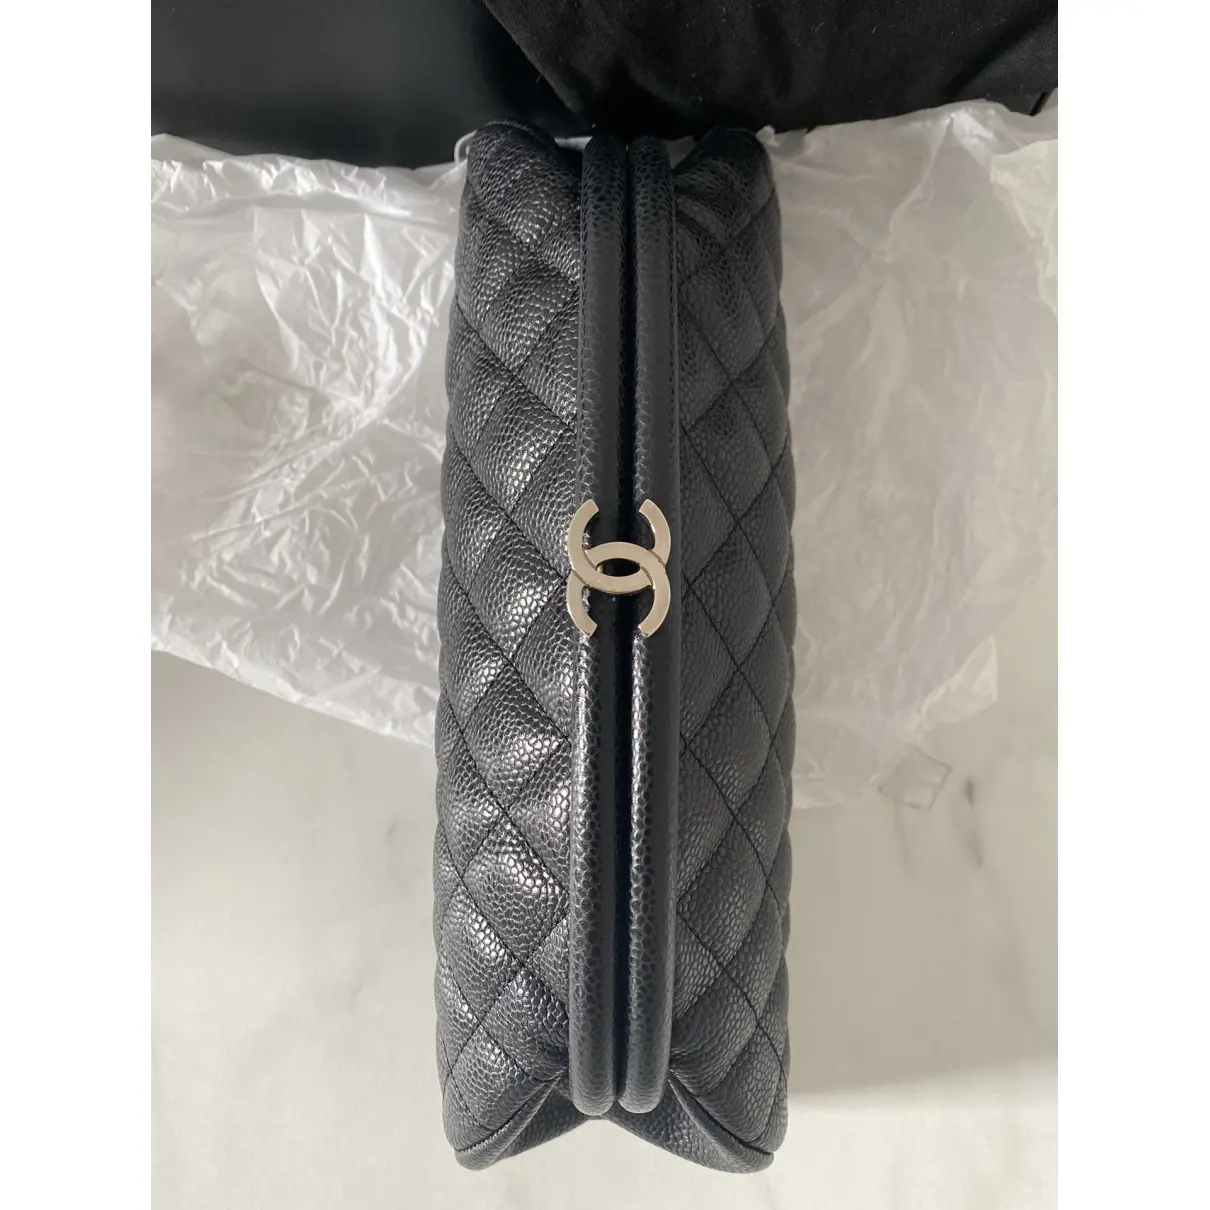 Buy Chanel Timeless/Classique leather clutch bag online - Vintage